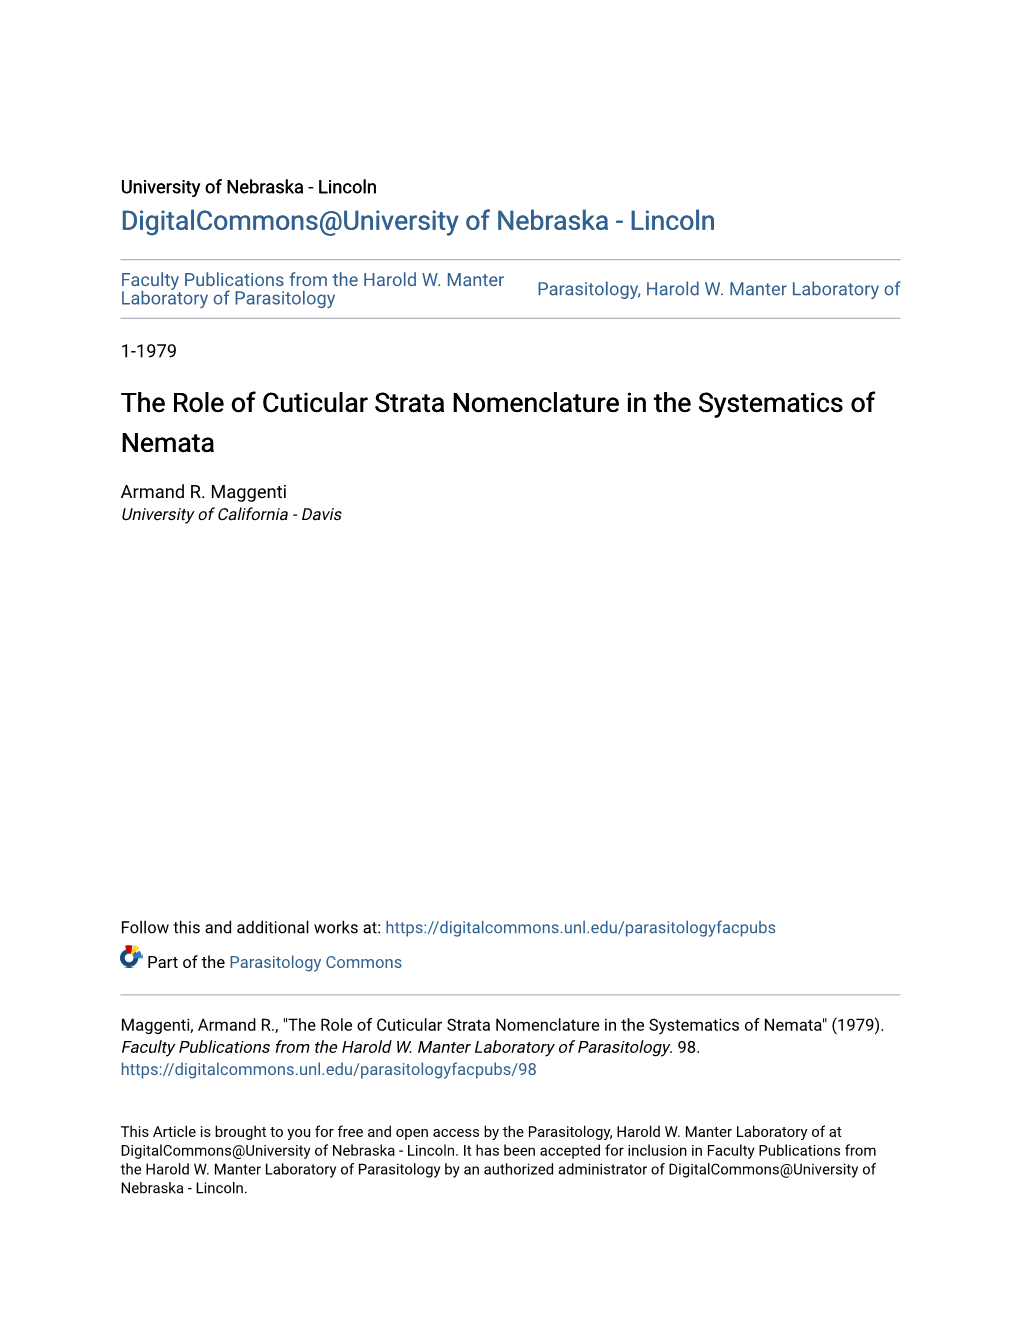 The Role of Cuticular Strata Nomenclature in the Systematics of Nemata